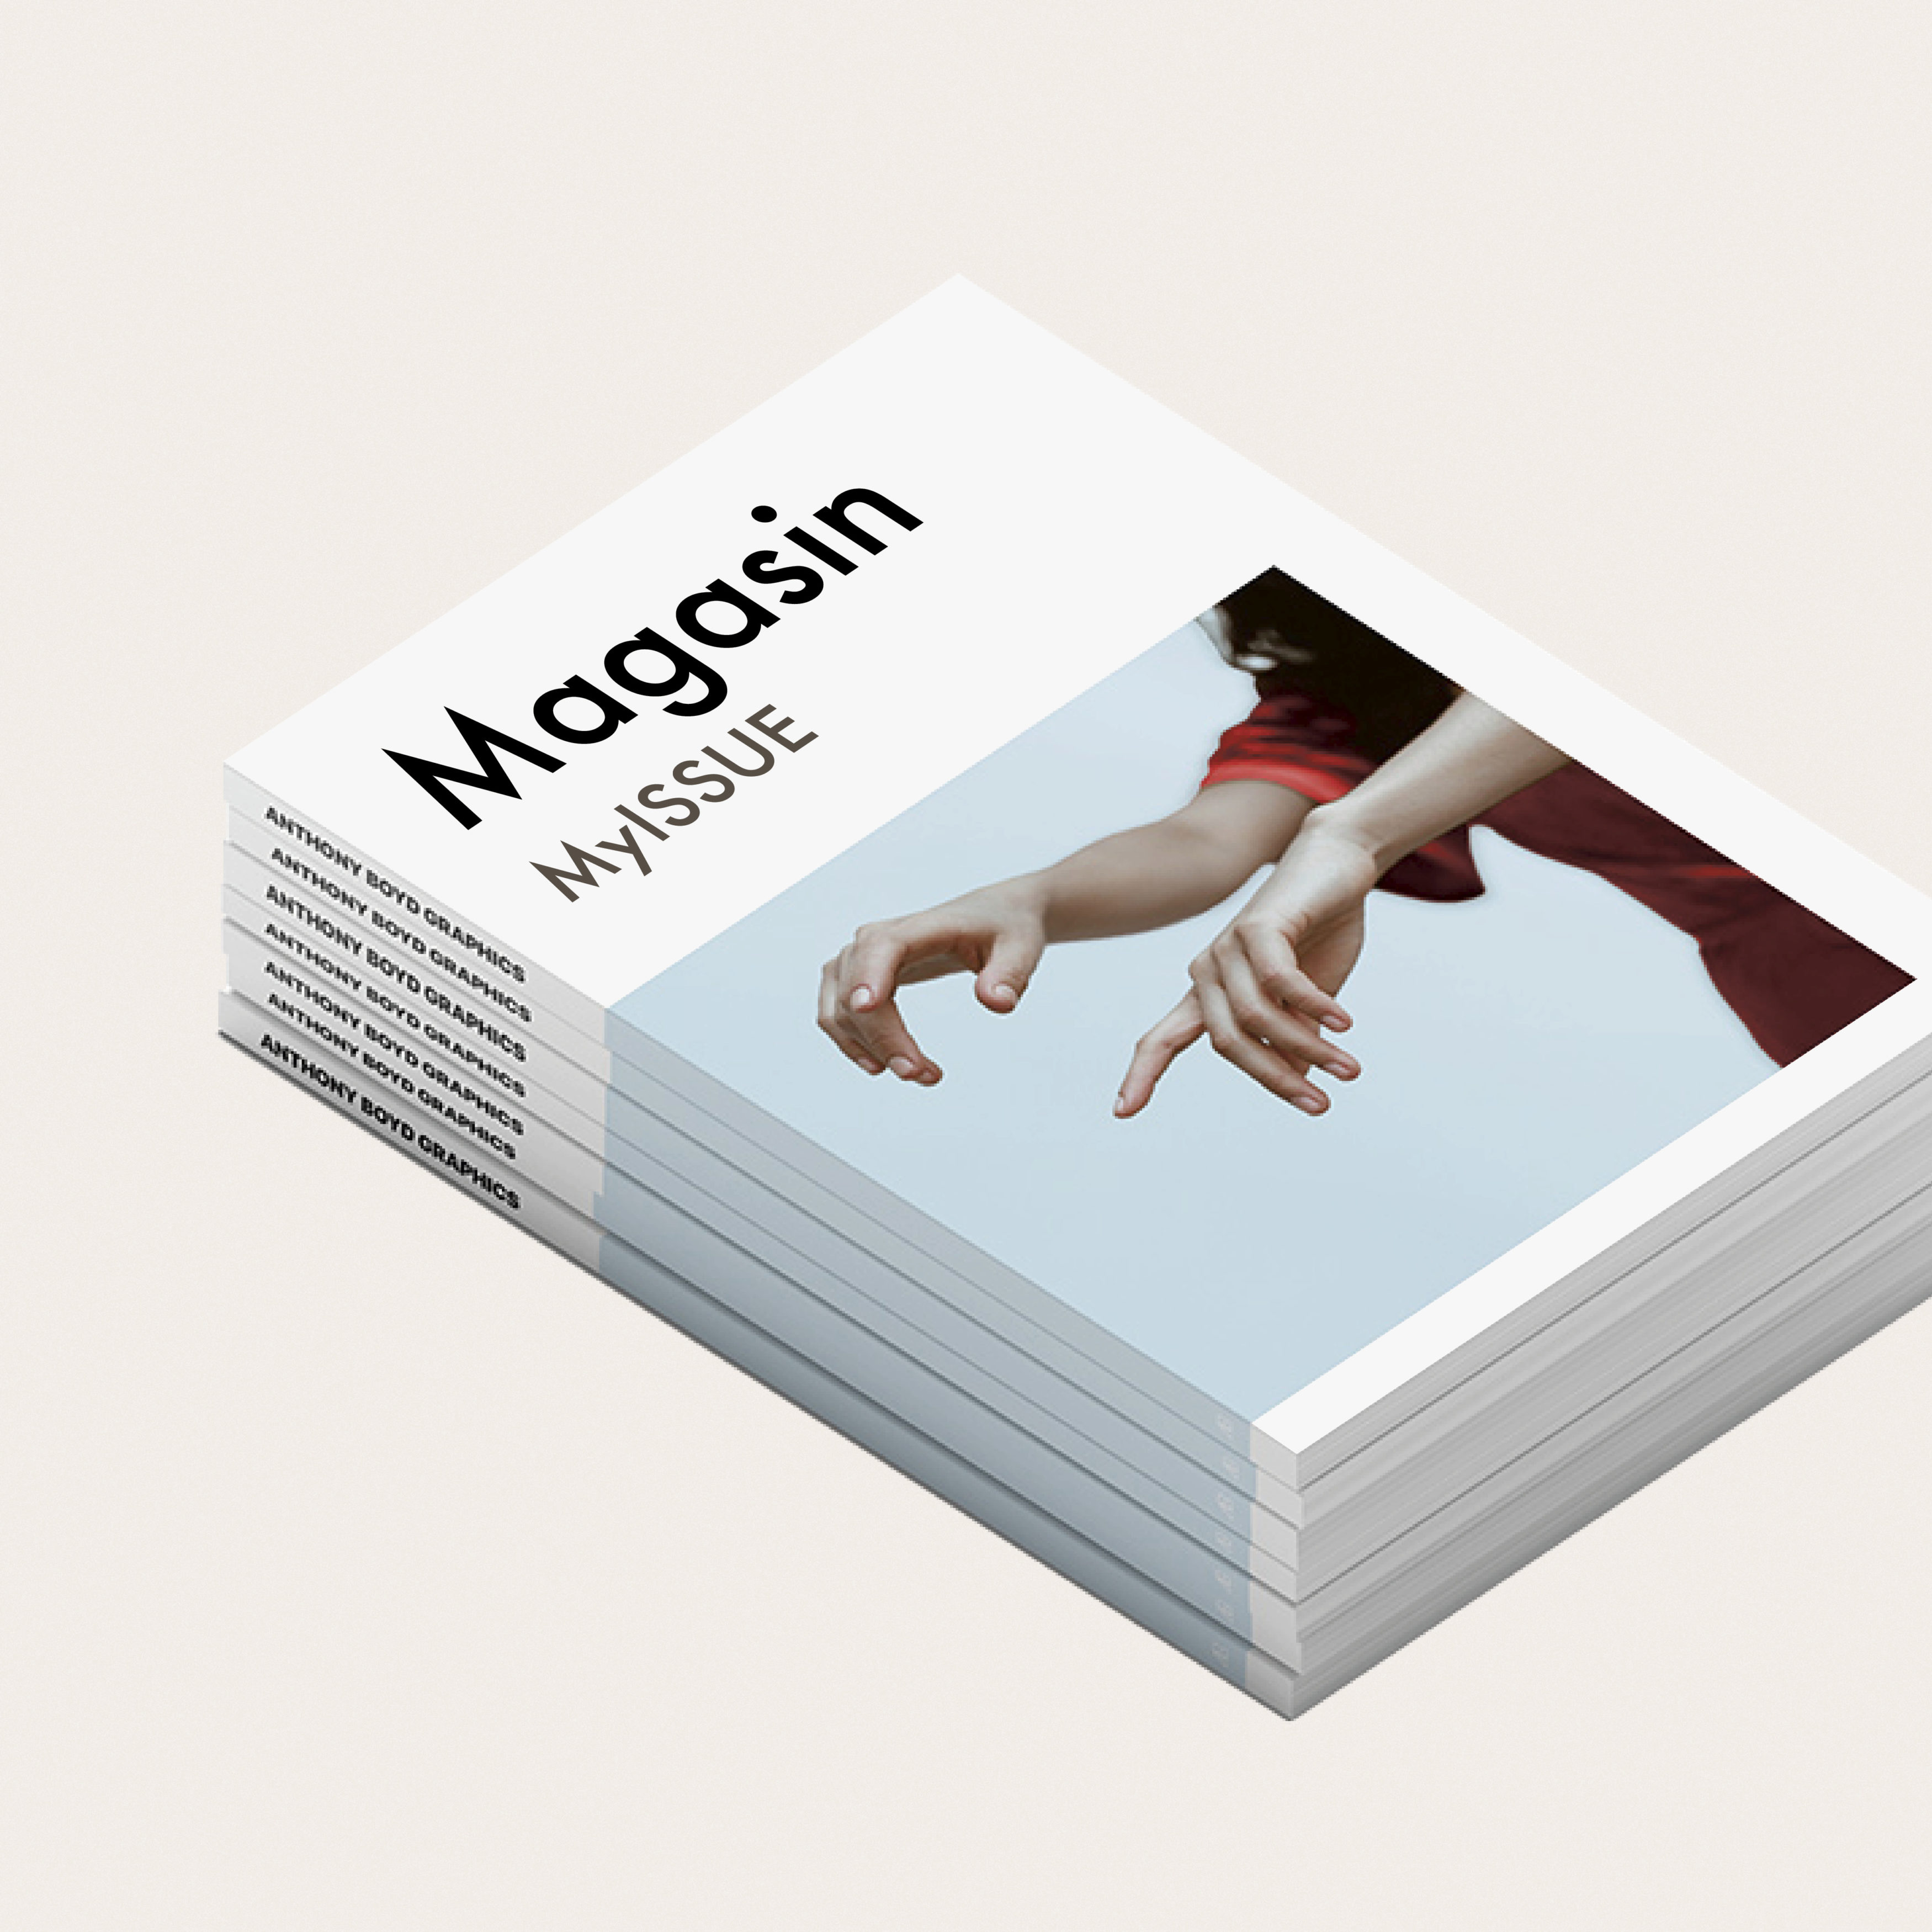 myssue.dk magasin layout content creation